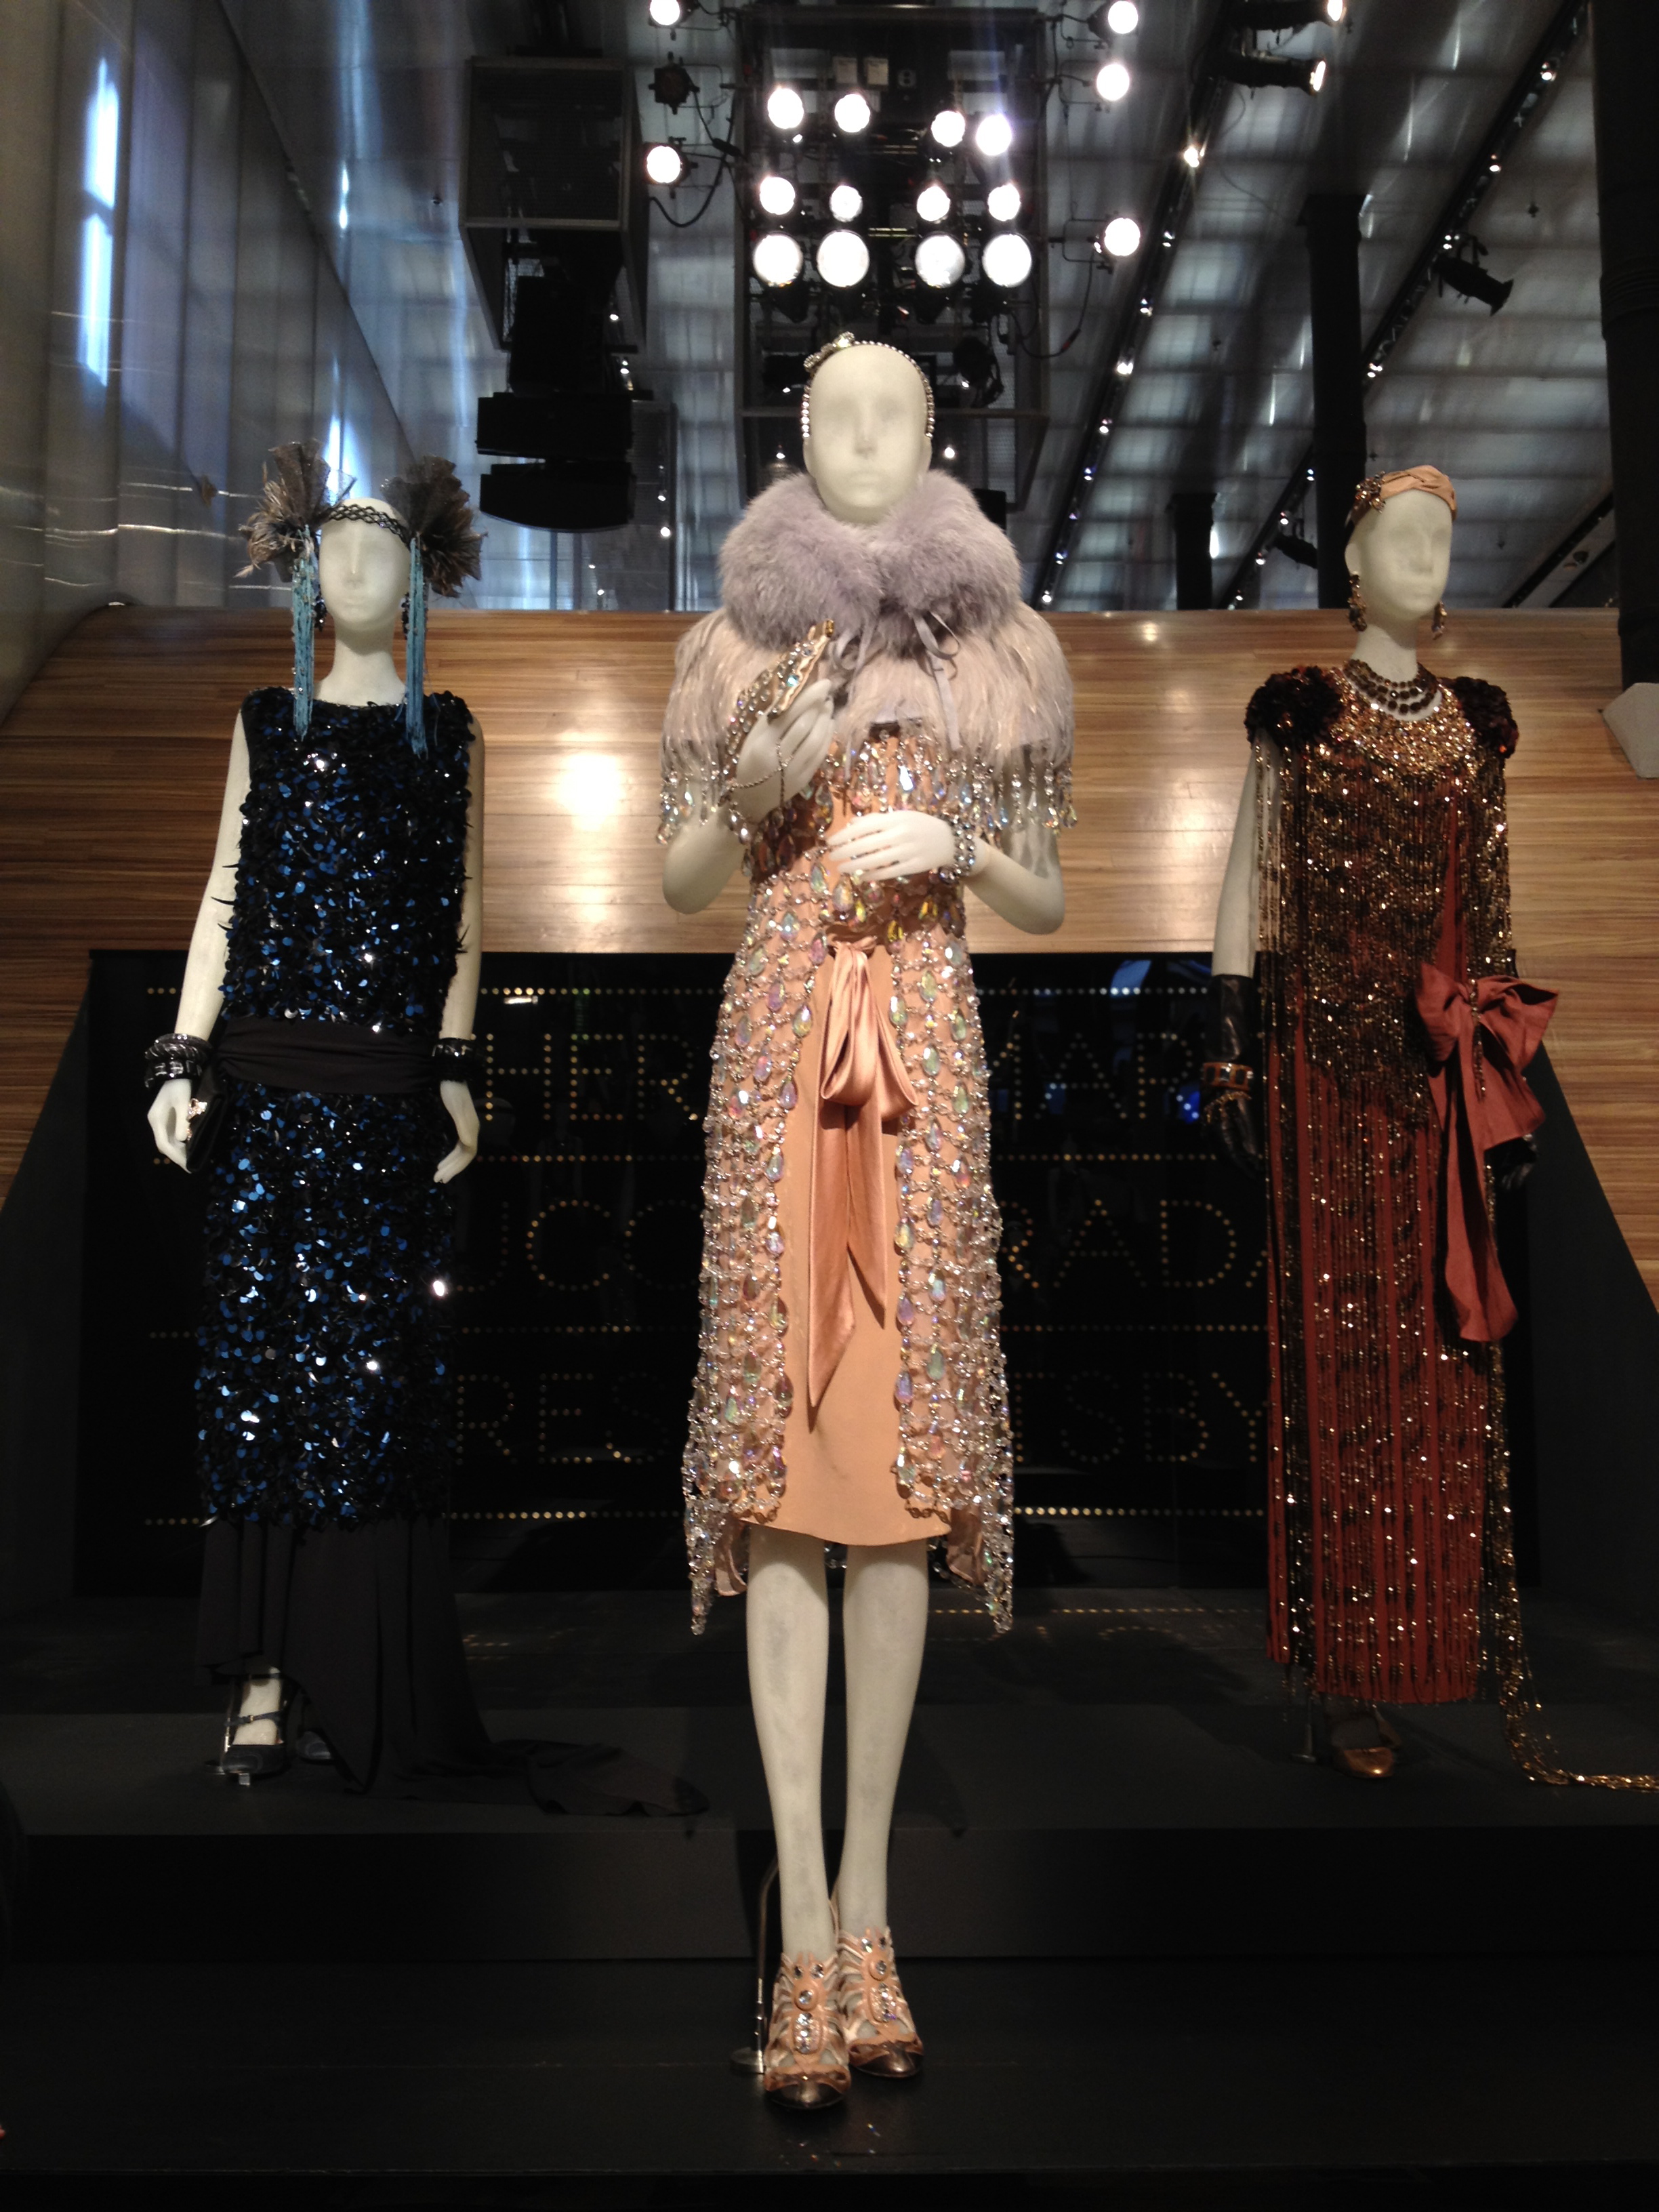 The Great Gatsby Collection at Prada | Amanda F. Gordon